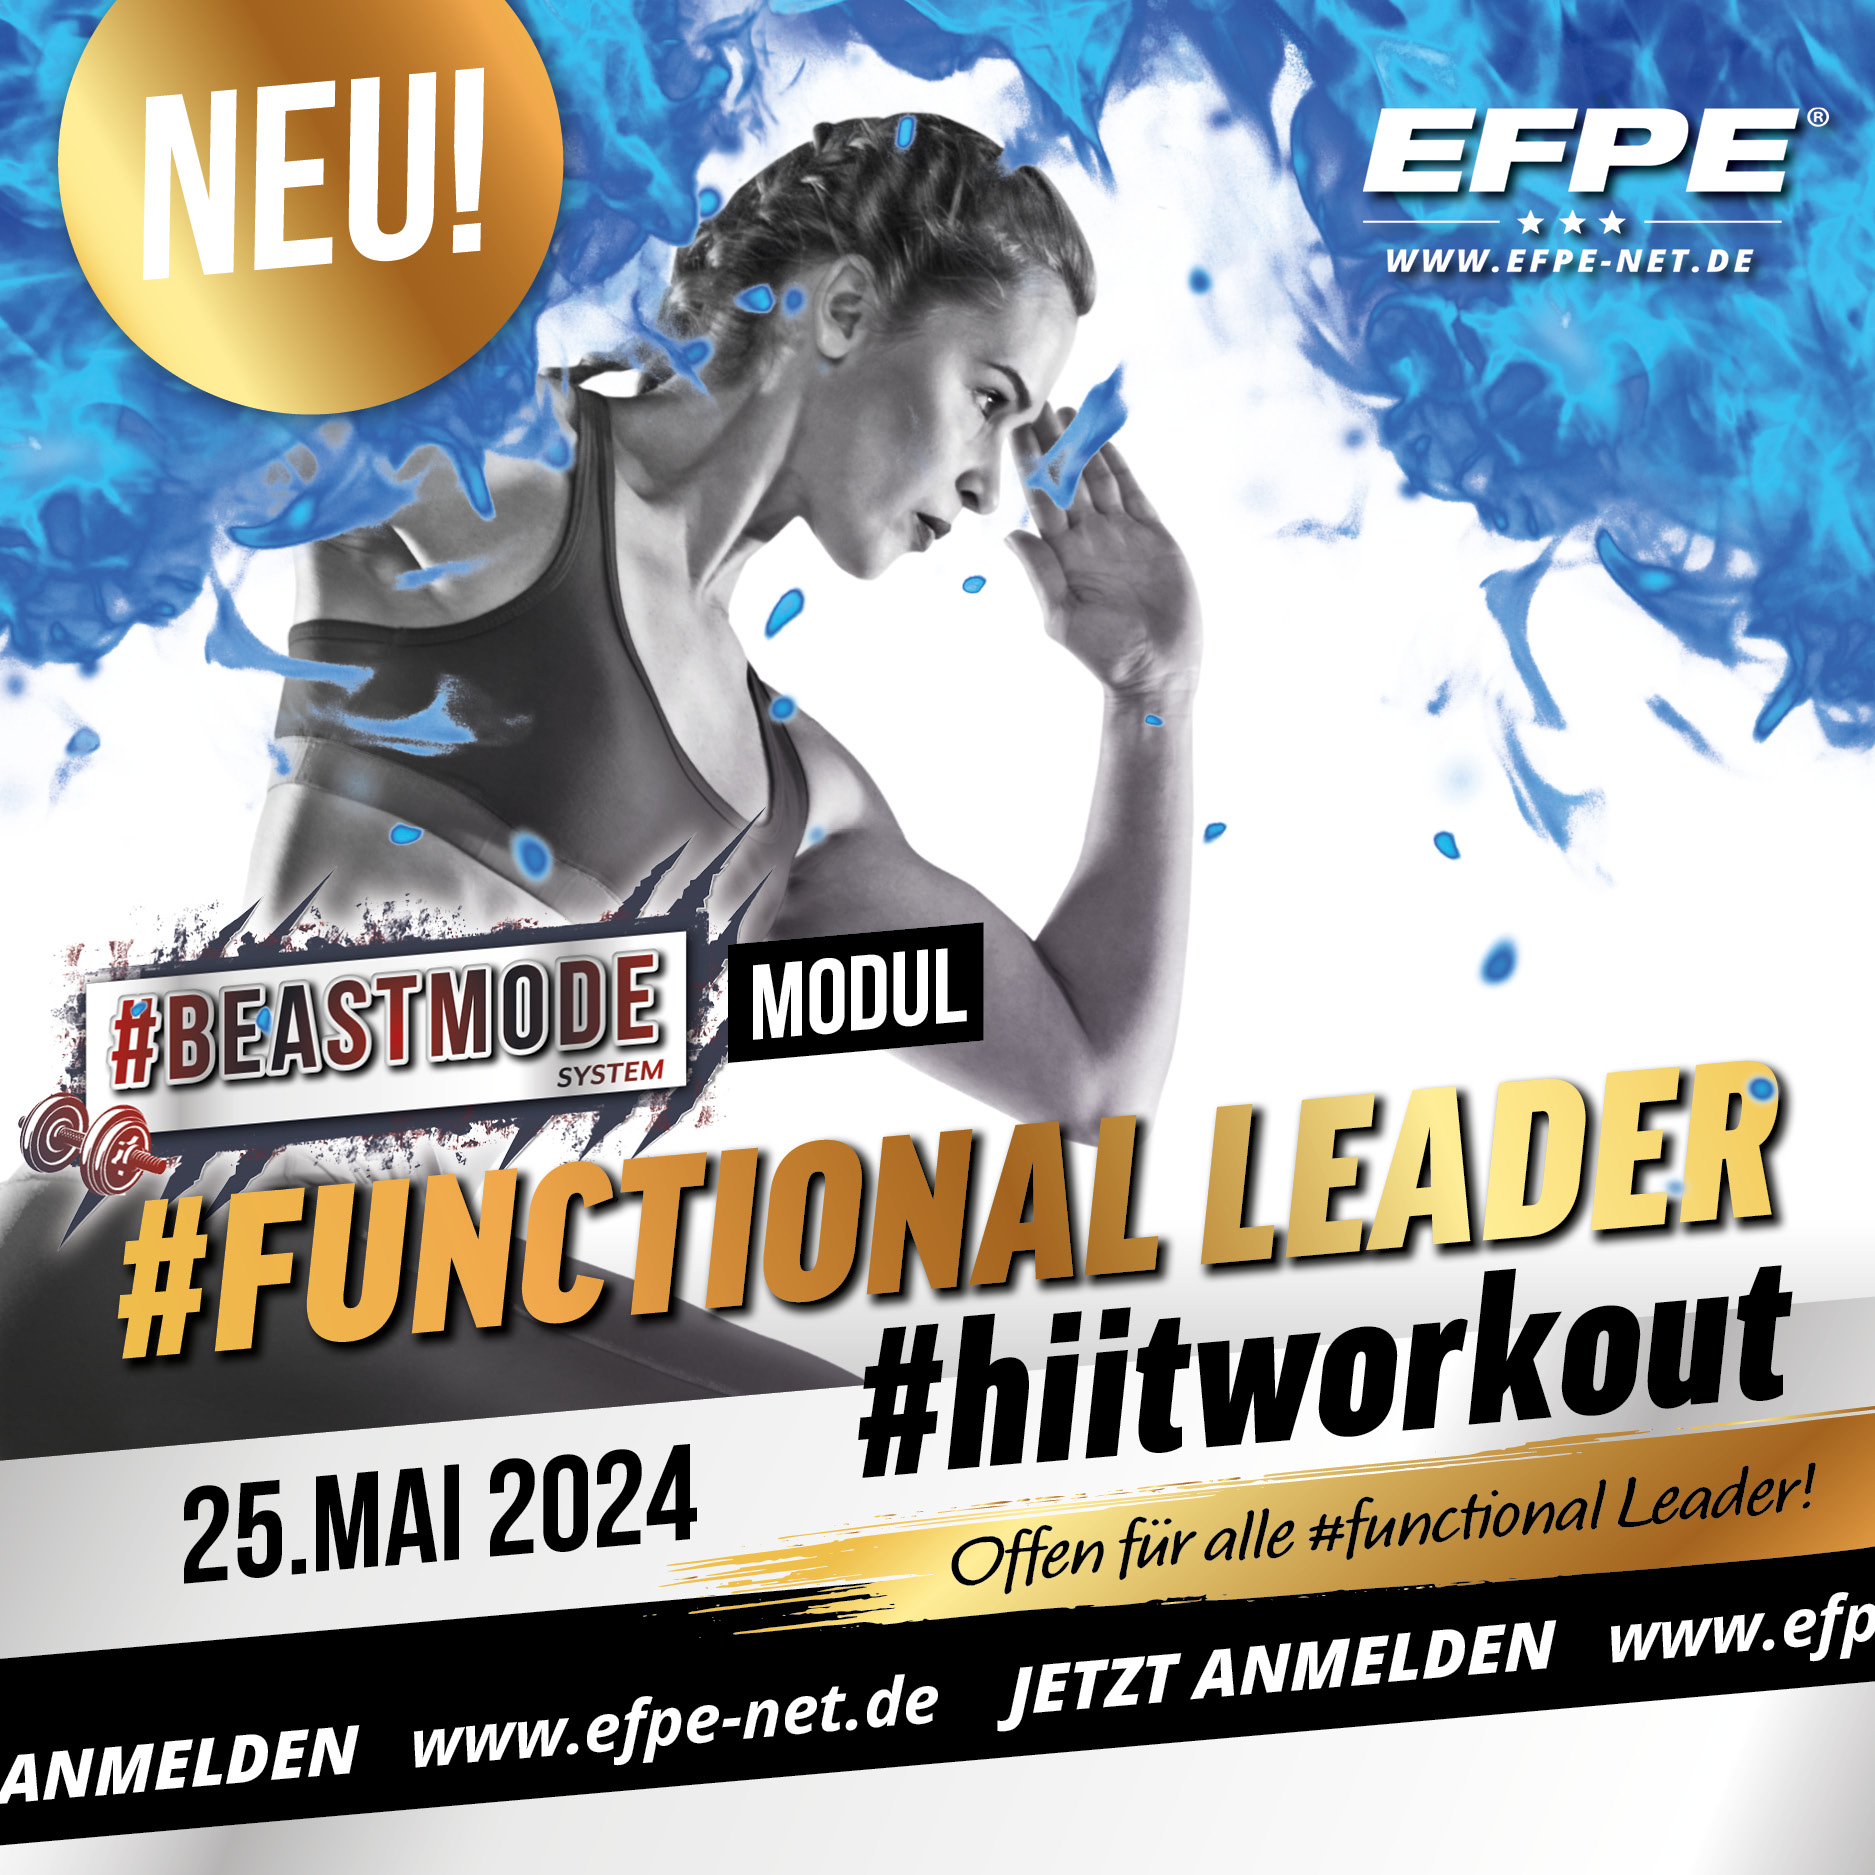 hiitworkout EFPE ® - Beastmode Modul #functional leader #hiitworkout